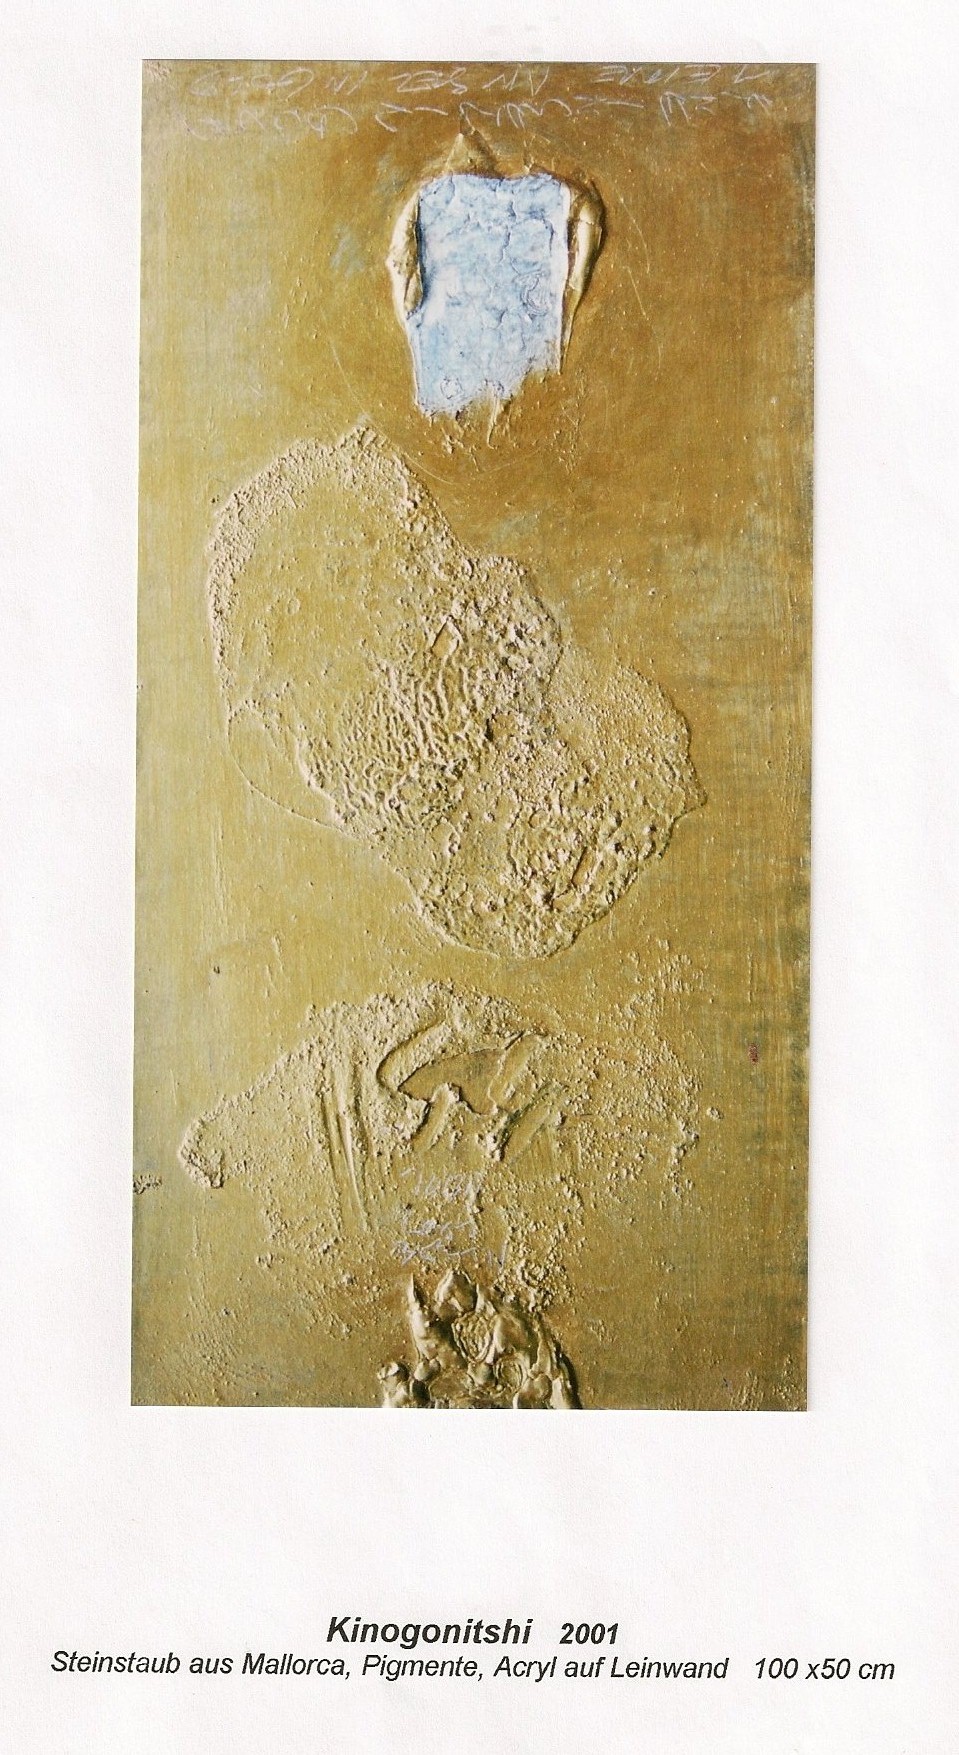 KINOGONISHI August 2001

100x50cm

Steinstaub aus Mallorca,Pigmente,Acryl auf Leinwand